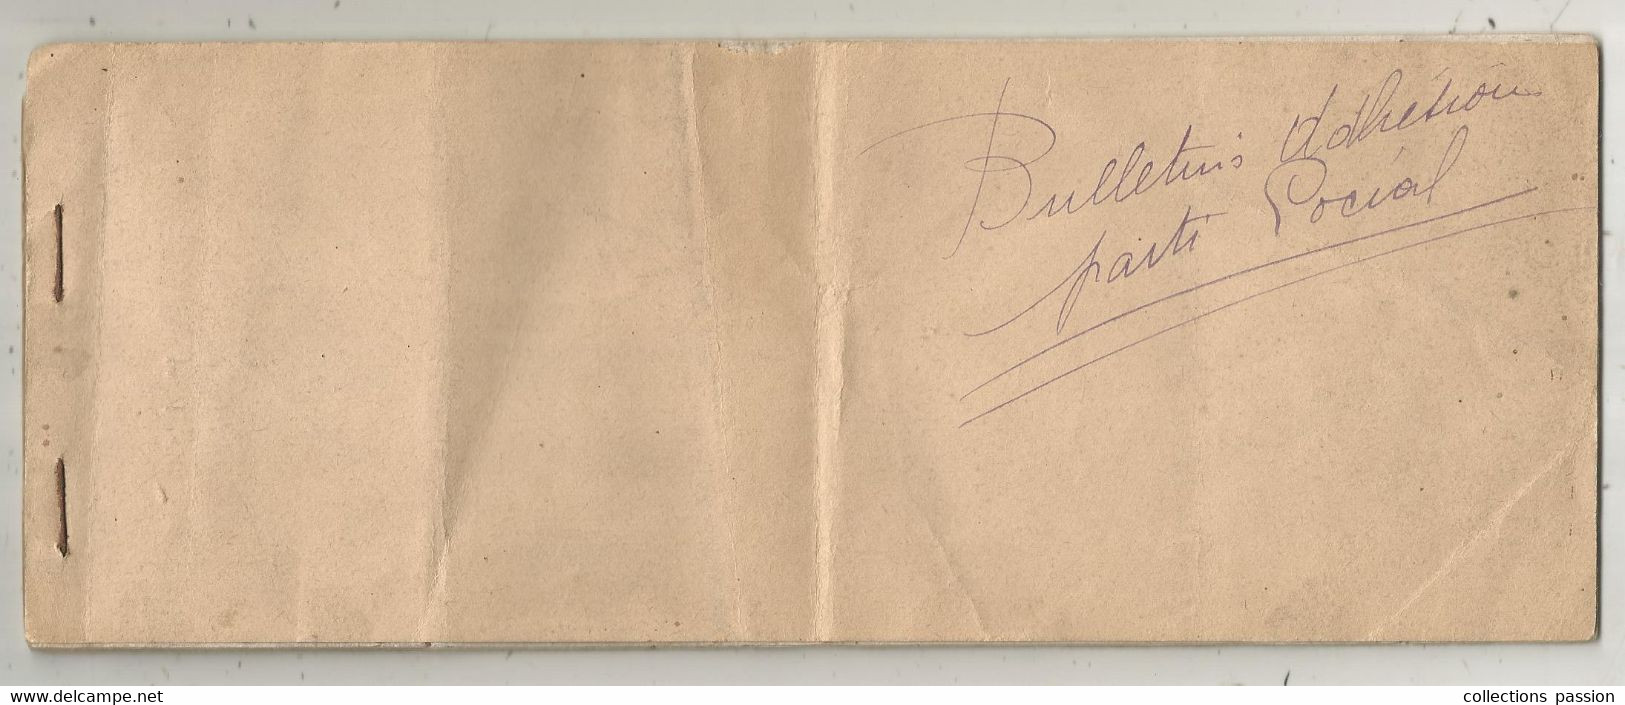 Bulletin D'adhésion Au PARTI SOCIAL FRANCAIS, Reste 6 Vierges, 1937, 3 Scans ,frais Fr 3.35e - Lidmaatschapskaarten